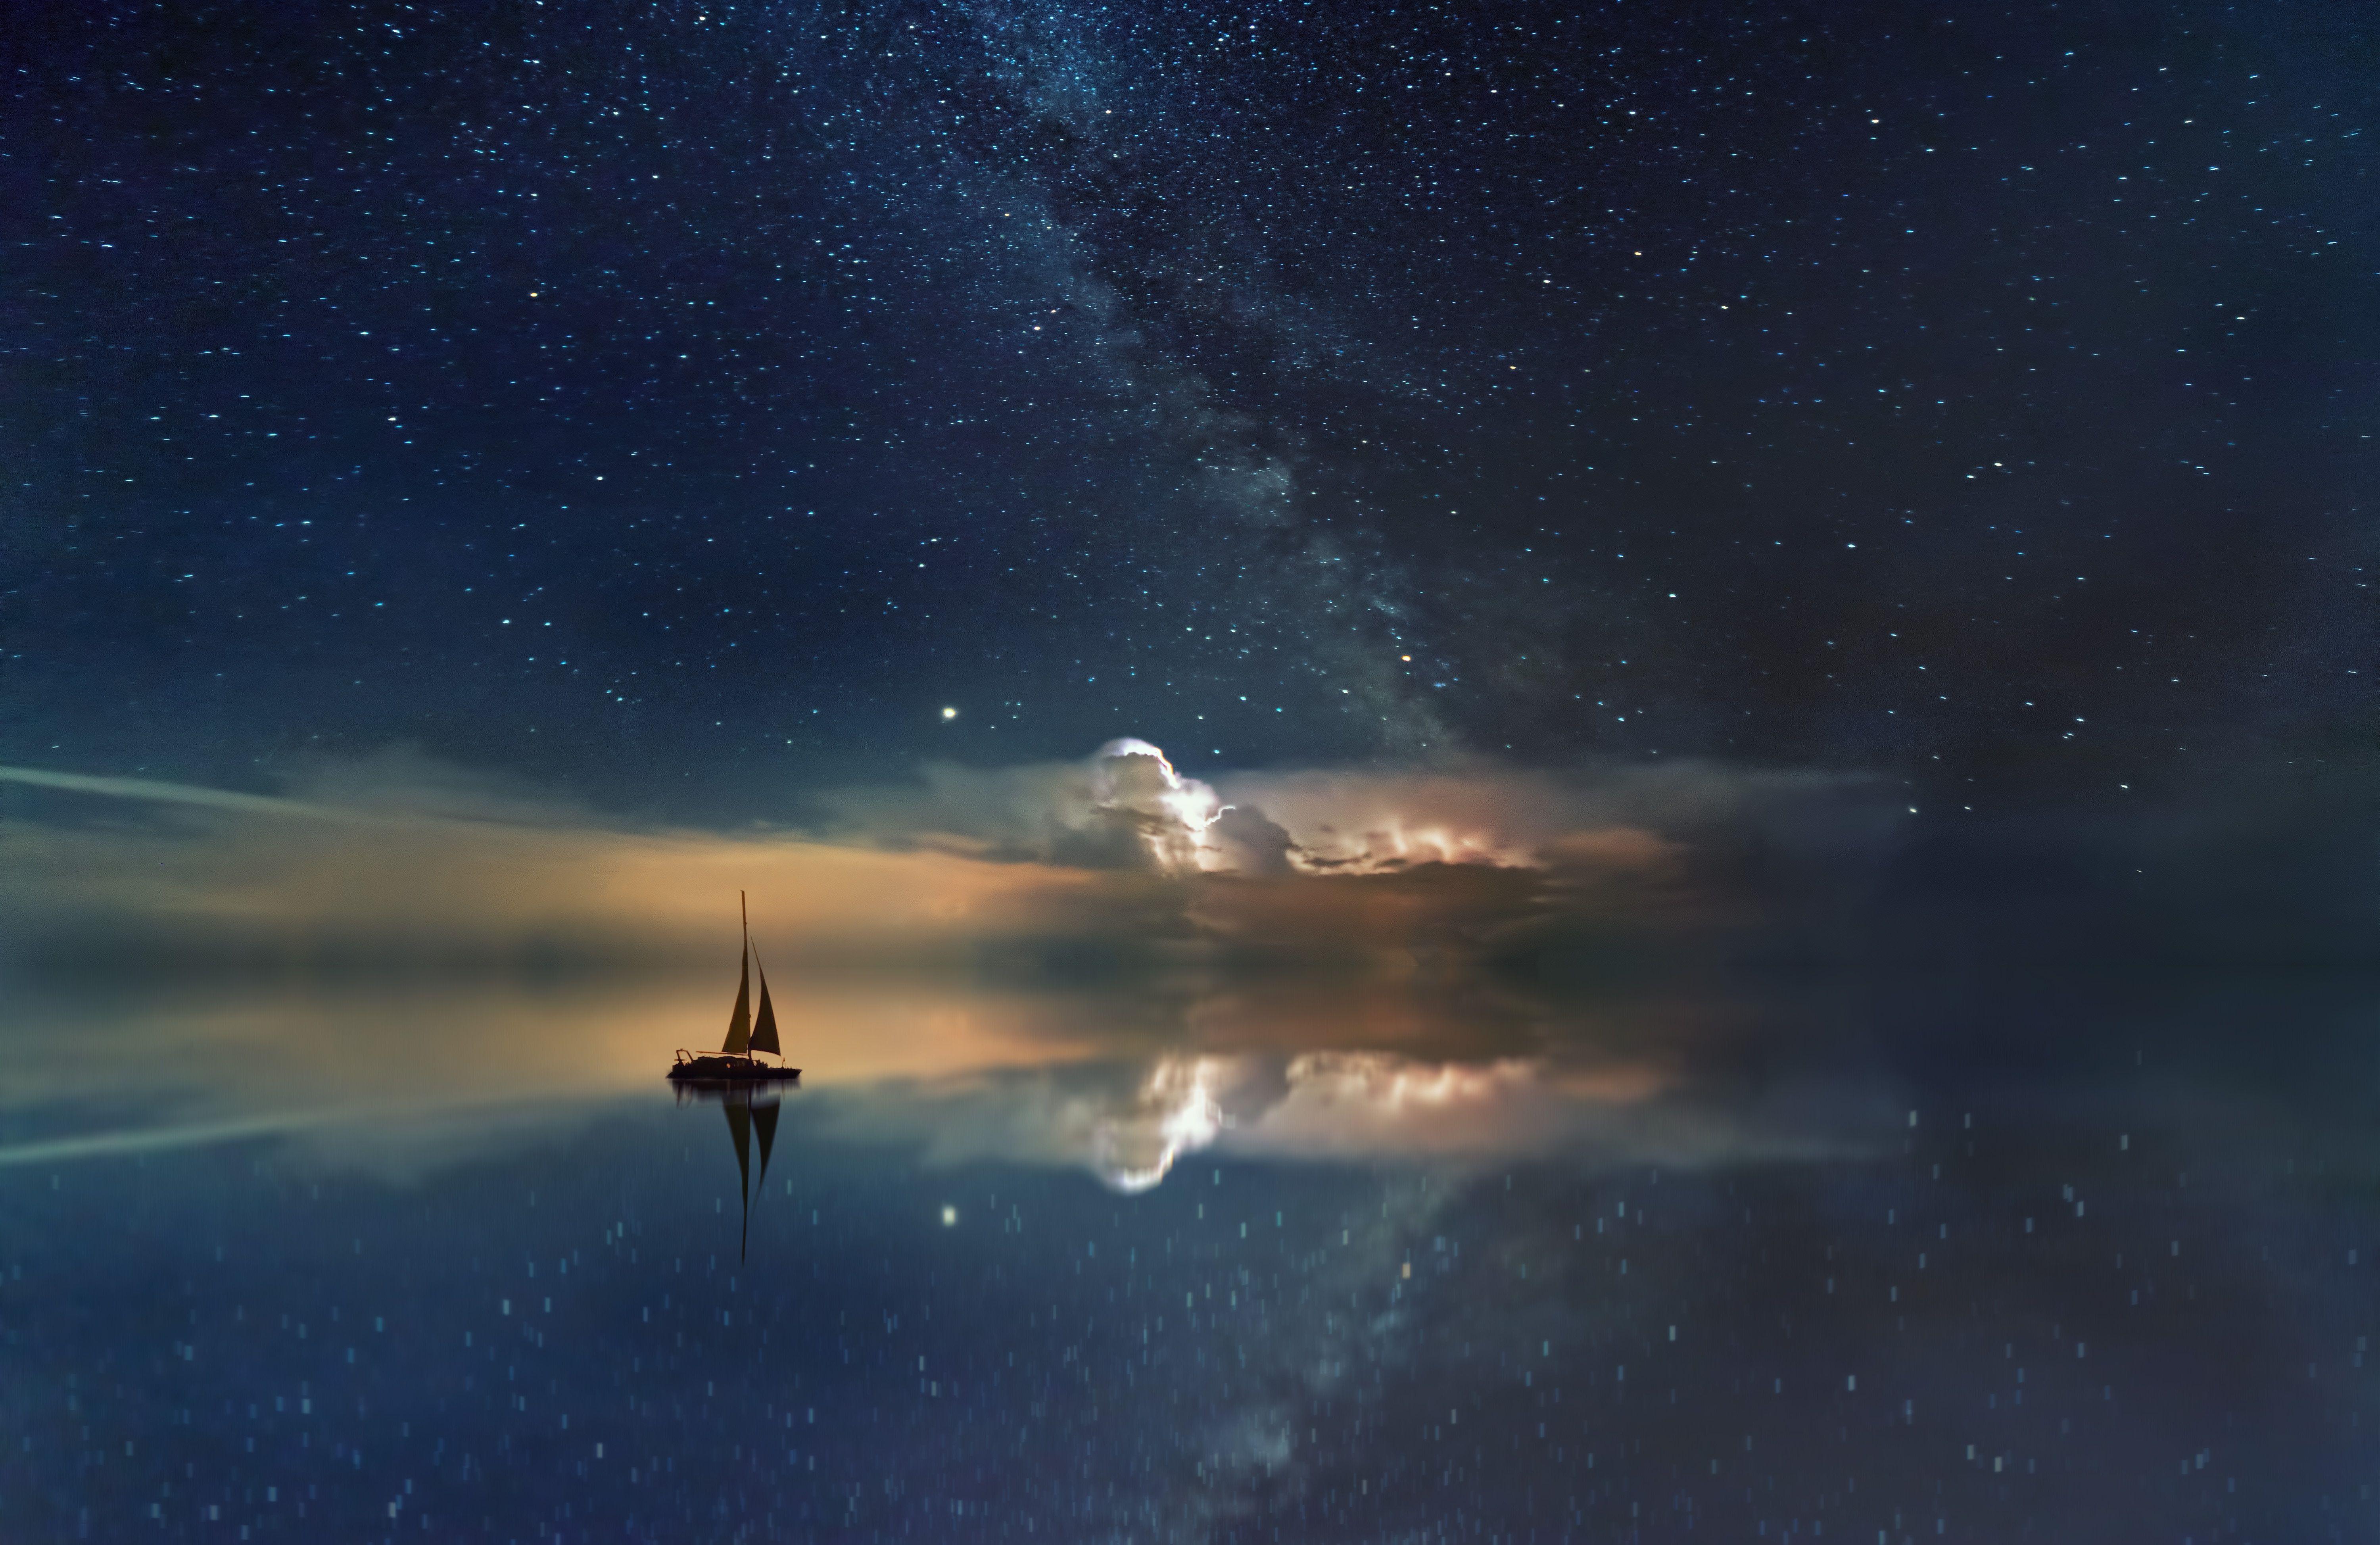 Lake Mirror Reflection Stars Boat Milky Way 5k, HD Photography, 4k